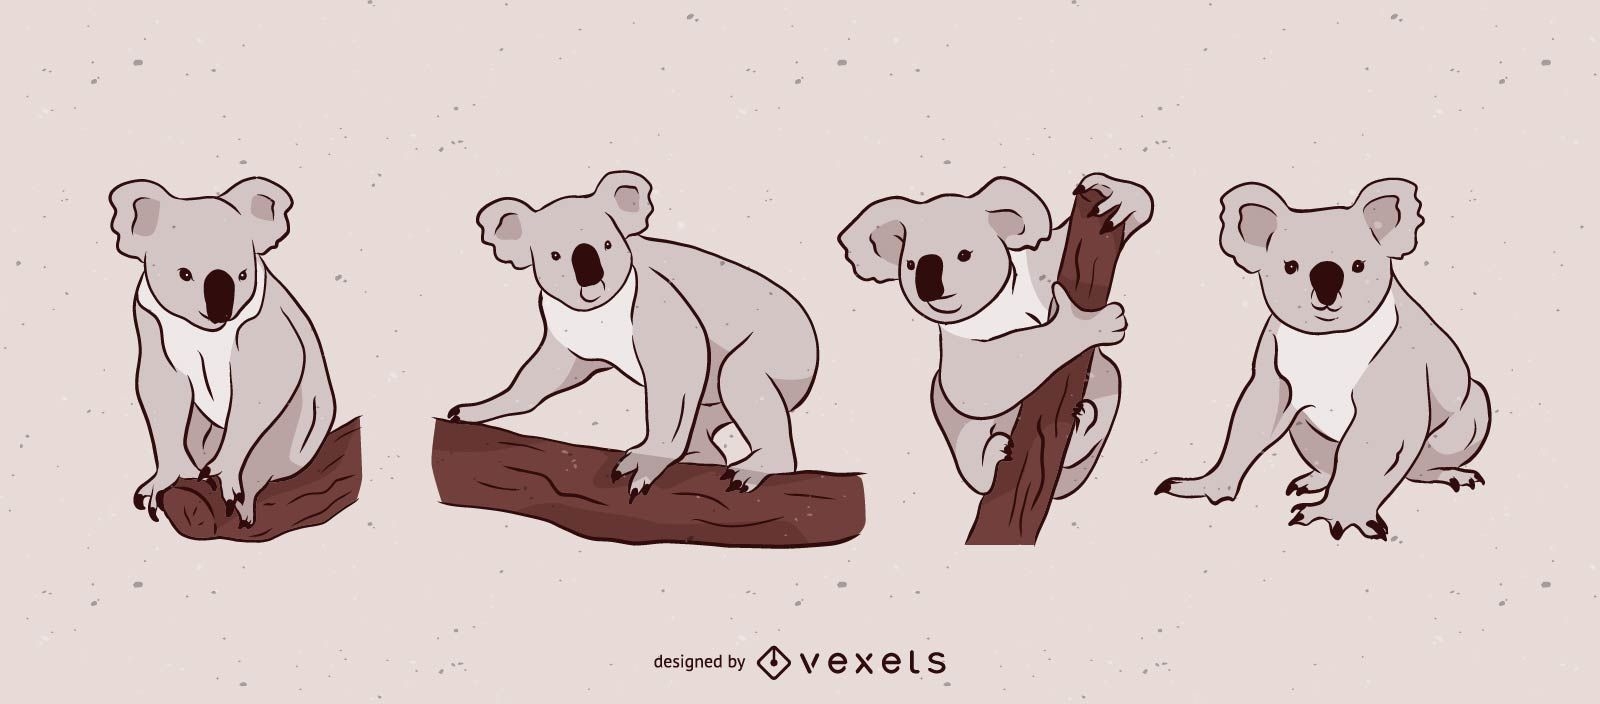 Grauer Koalab?r Illustrationssatz